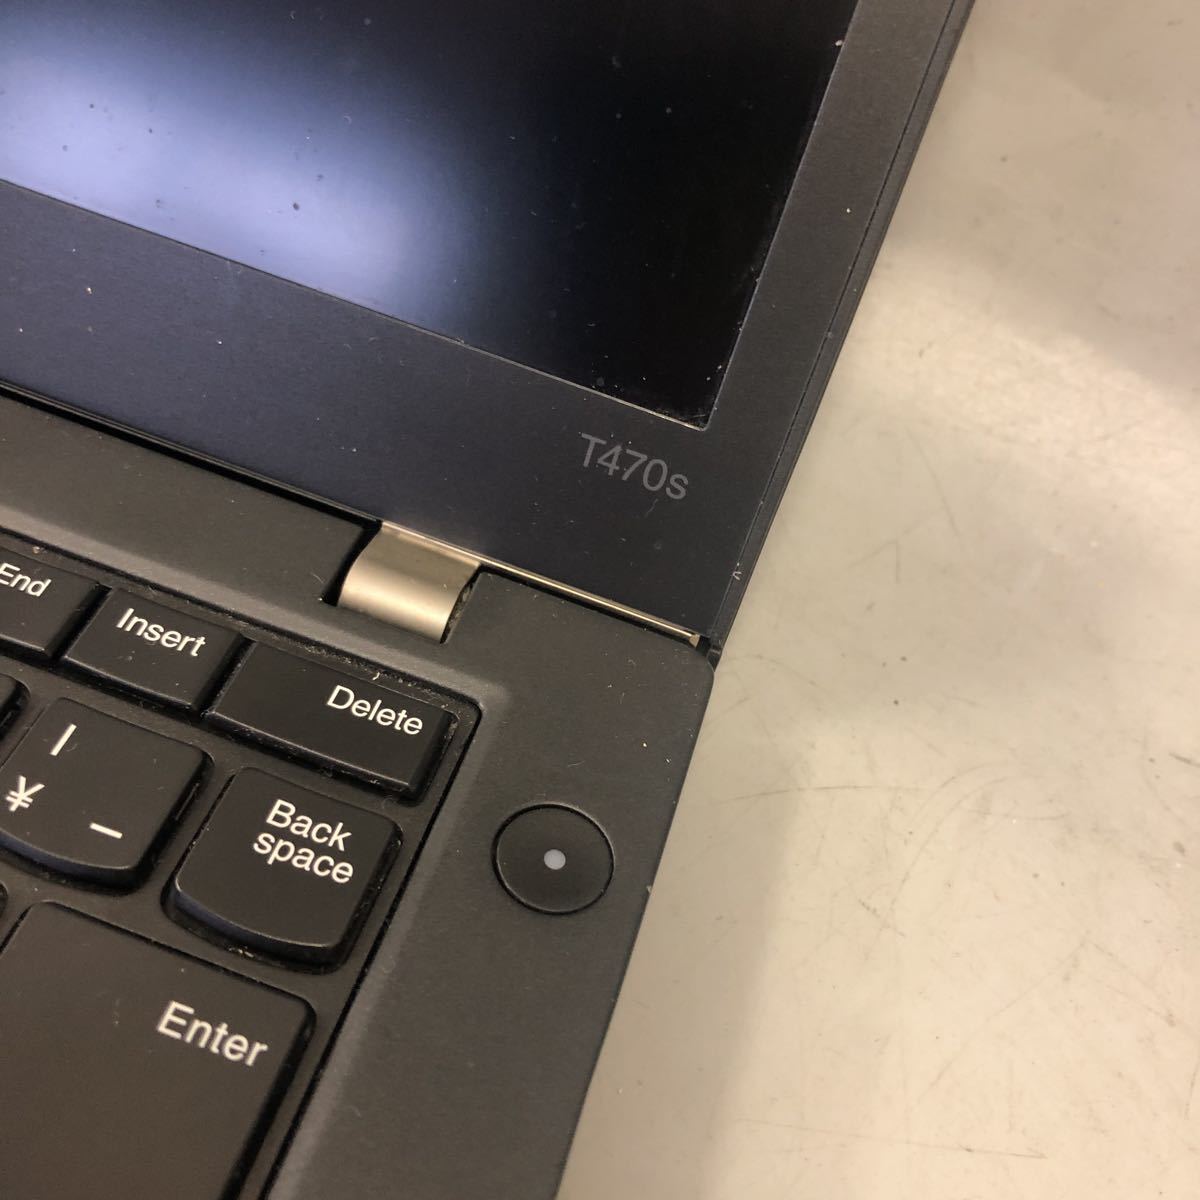 JXJK3877 【ジャンク】Lenovo ThinkPad T470s /Core i7-7600U 2.80GHz/ メモリ:8GB / カメラ /起動不良_画像3